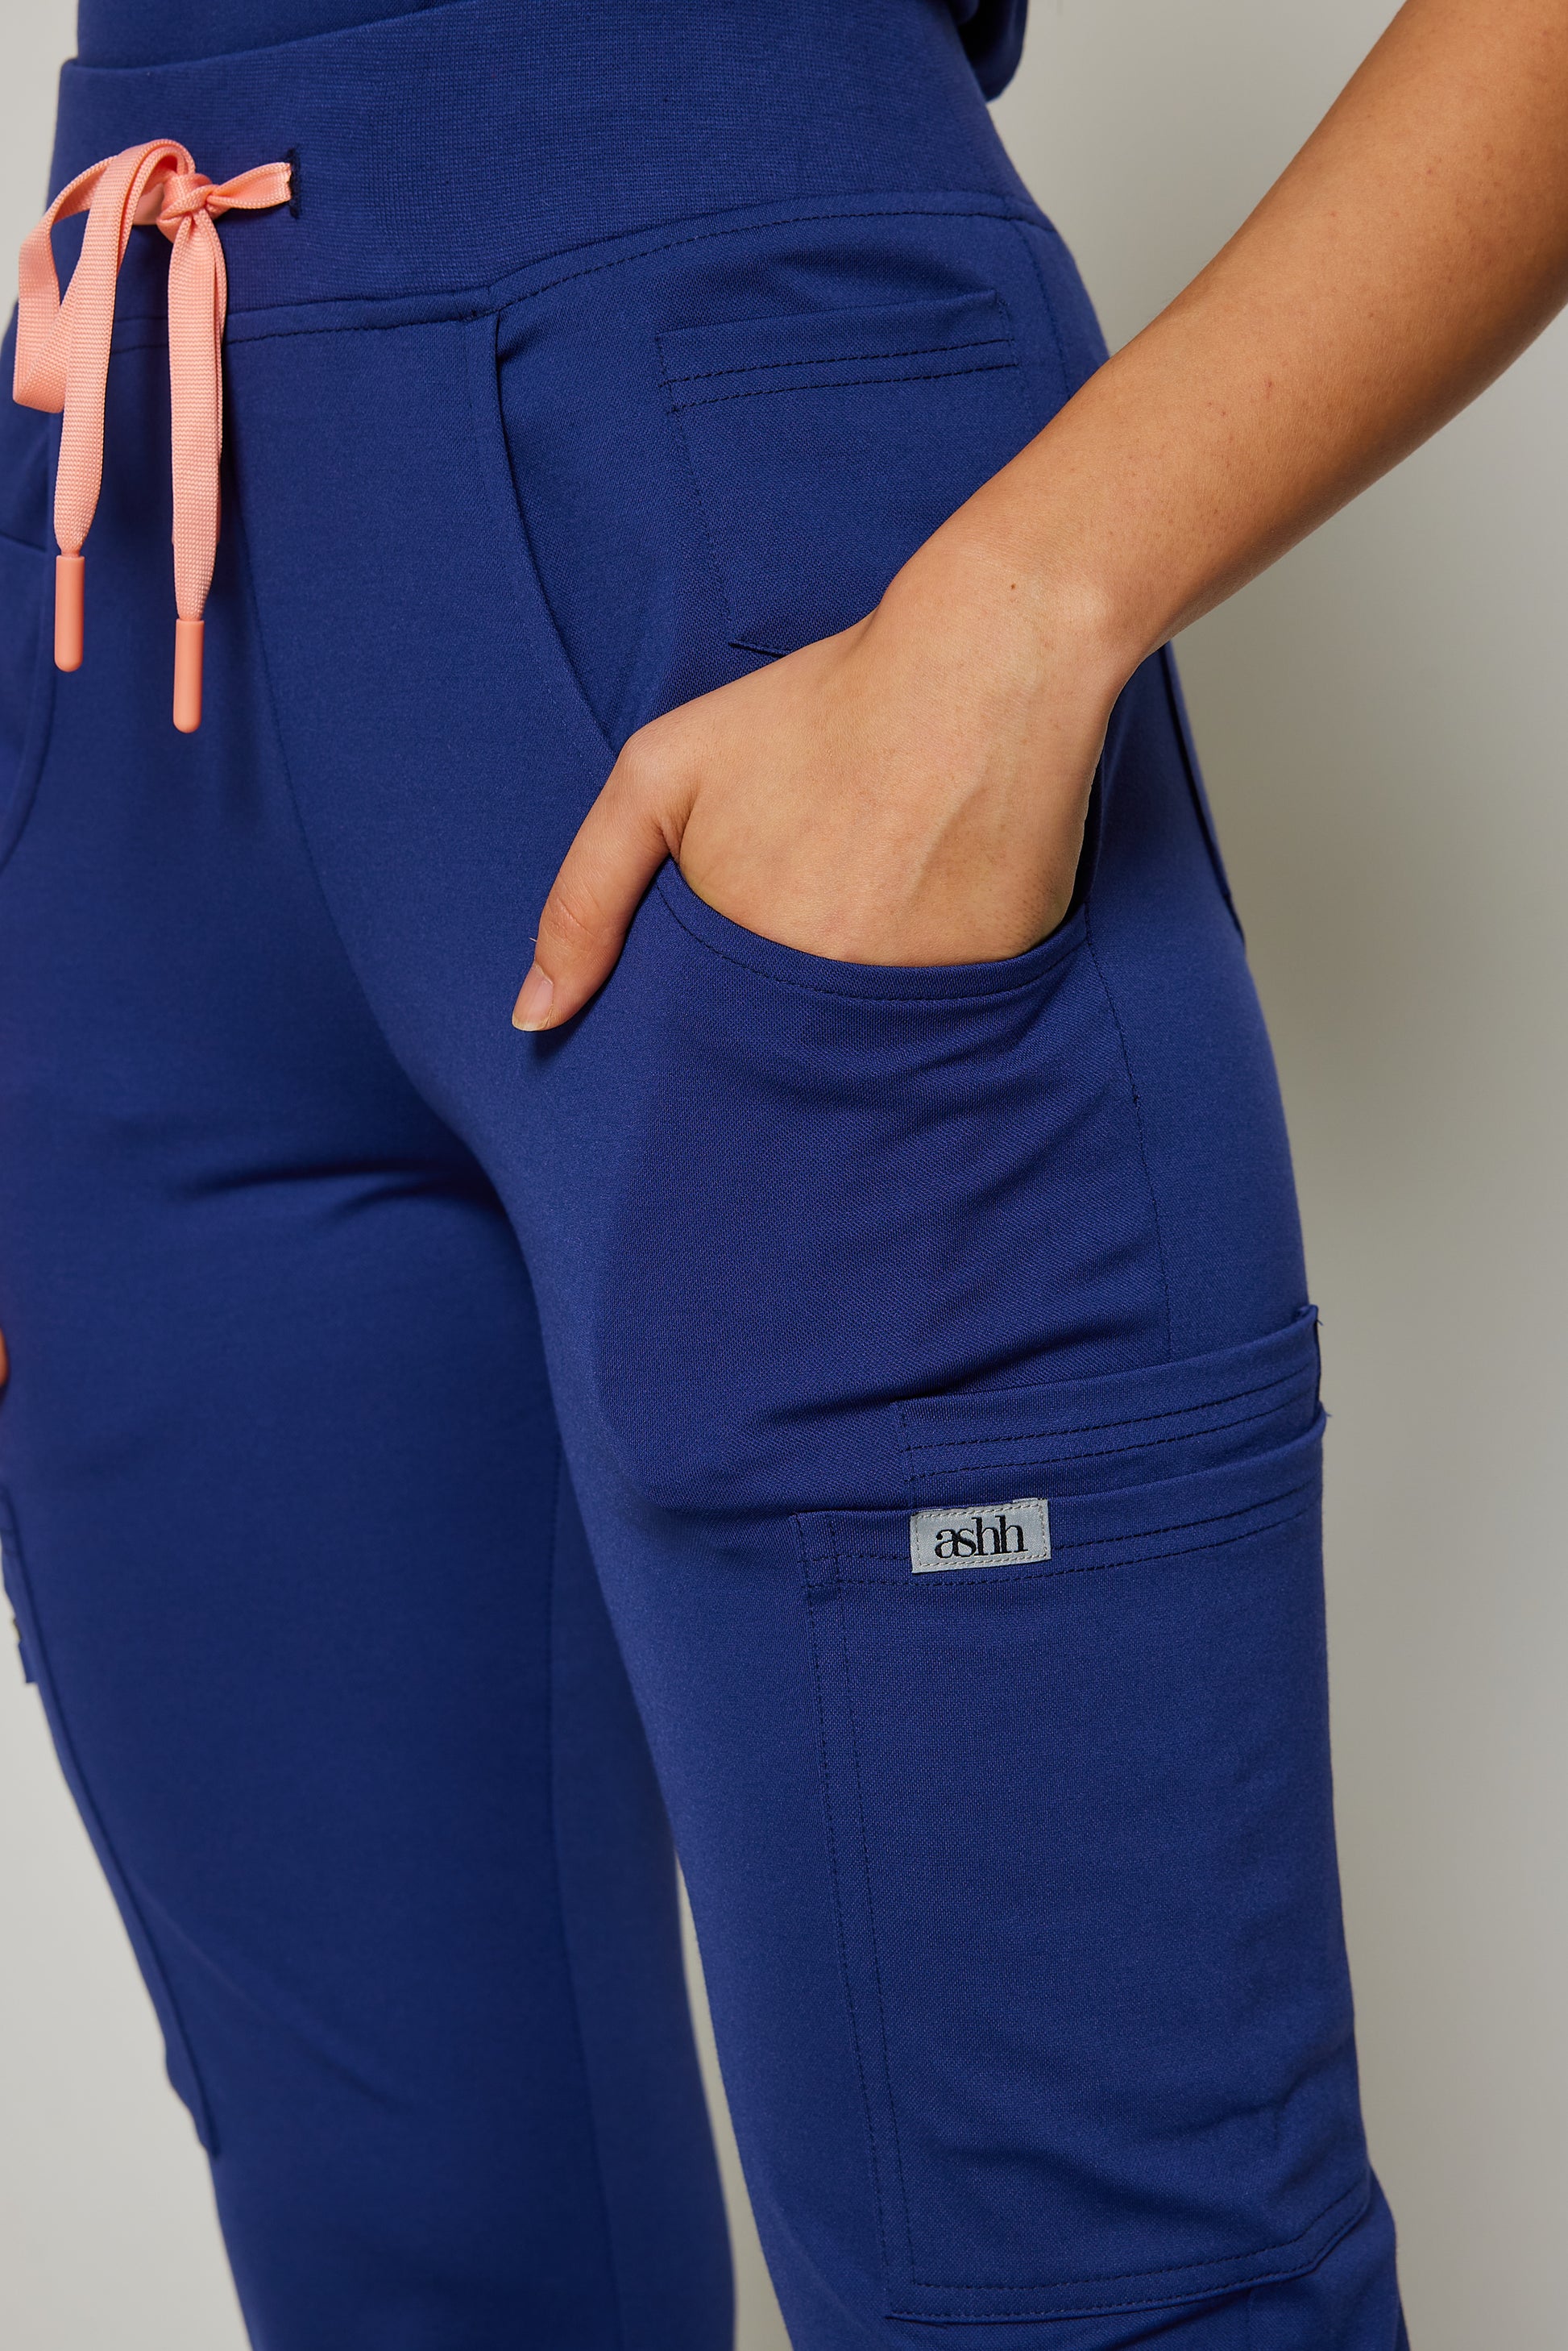 Embrace Active Comfort in Aneesa Fit Scrub Jogger Pants – Ashh Scrubs